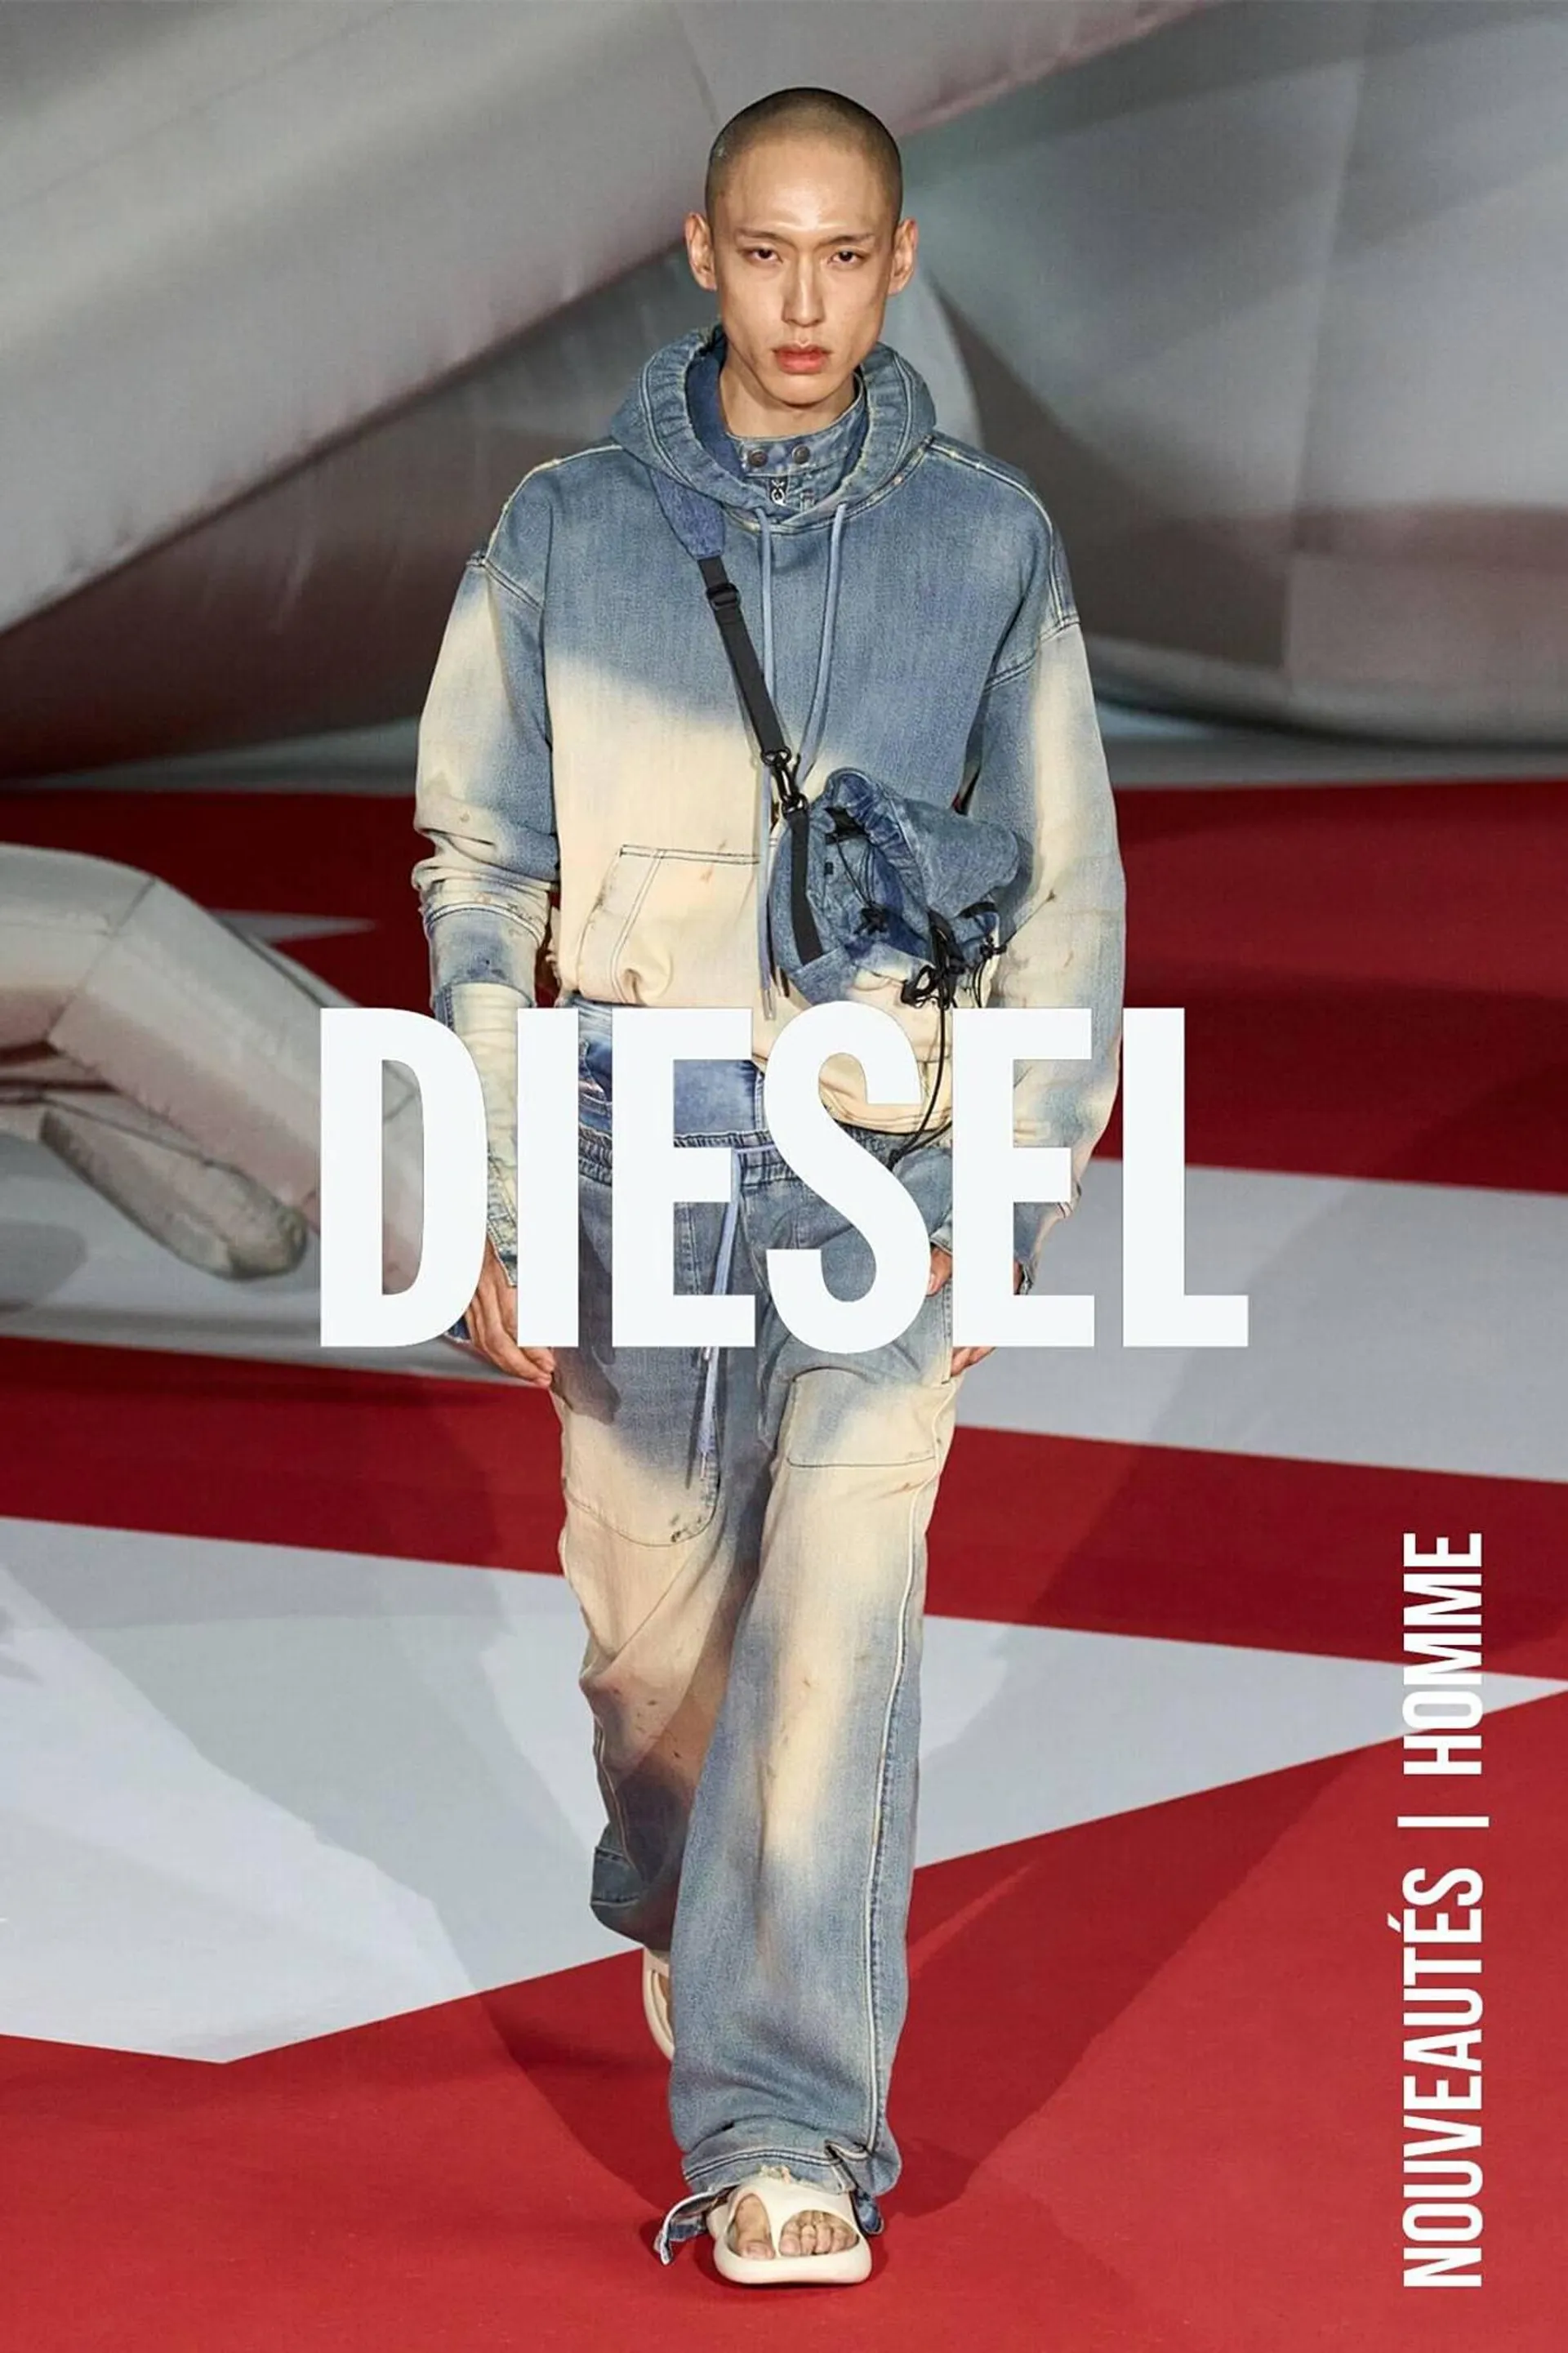 Catalogue Diesel - 1